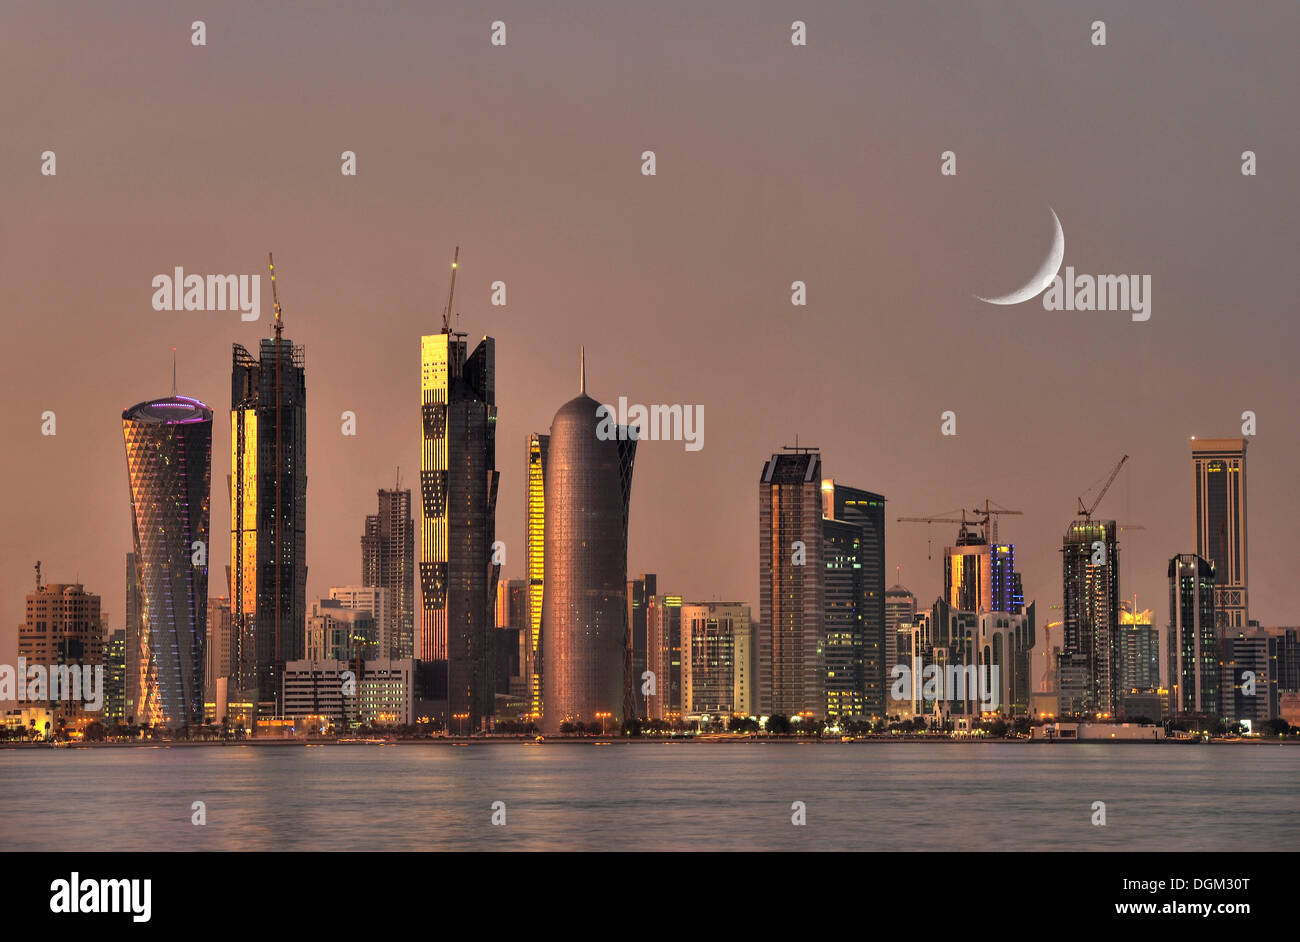 Dämmerung geschossen, Skyline von Doha, Tornado Tower, Peilturm, Frieden Türme, Al-Thani Turm, Mond, Doha, Qatar, Persischer Golf Stockfoto